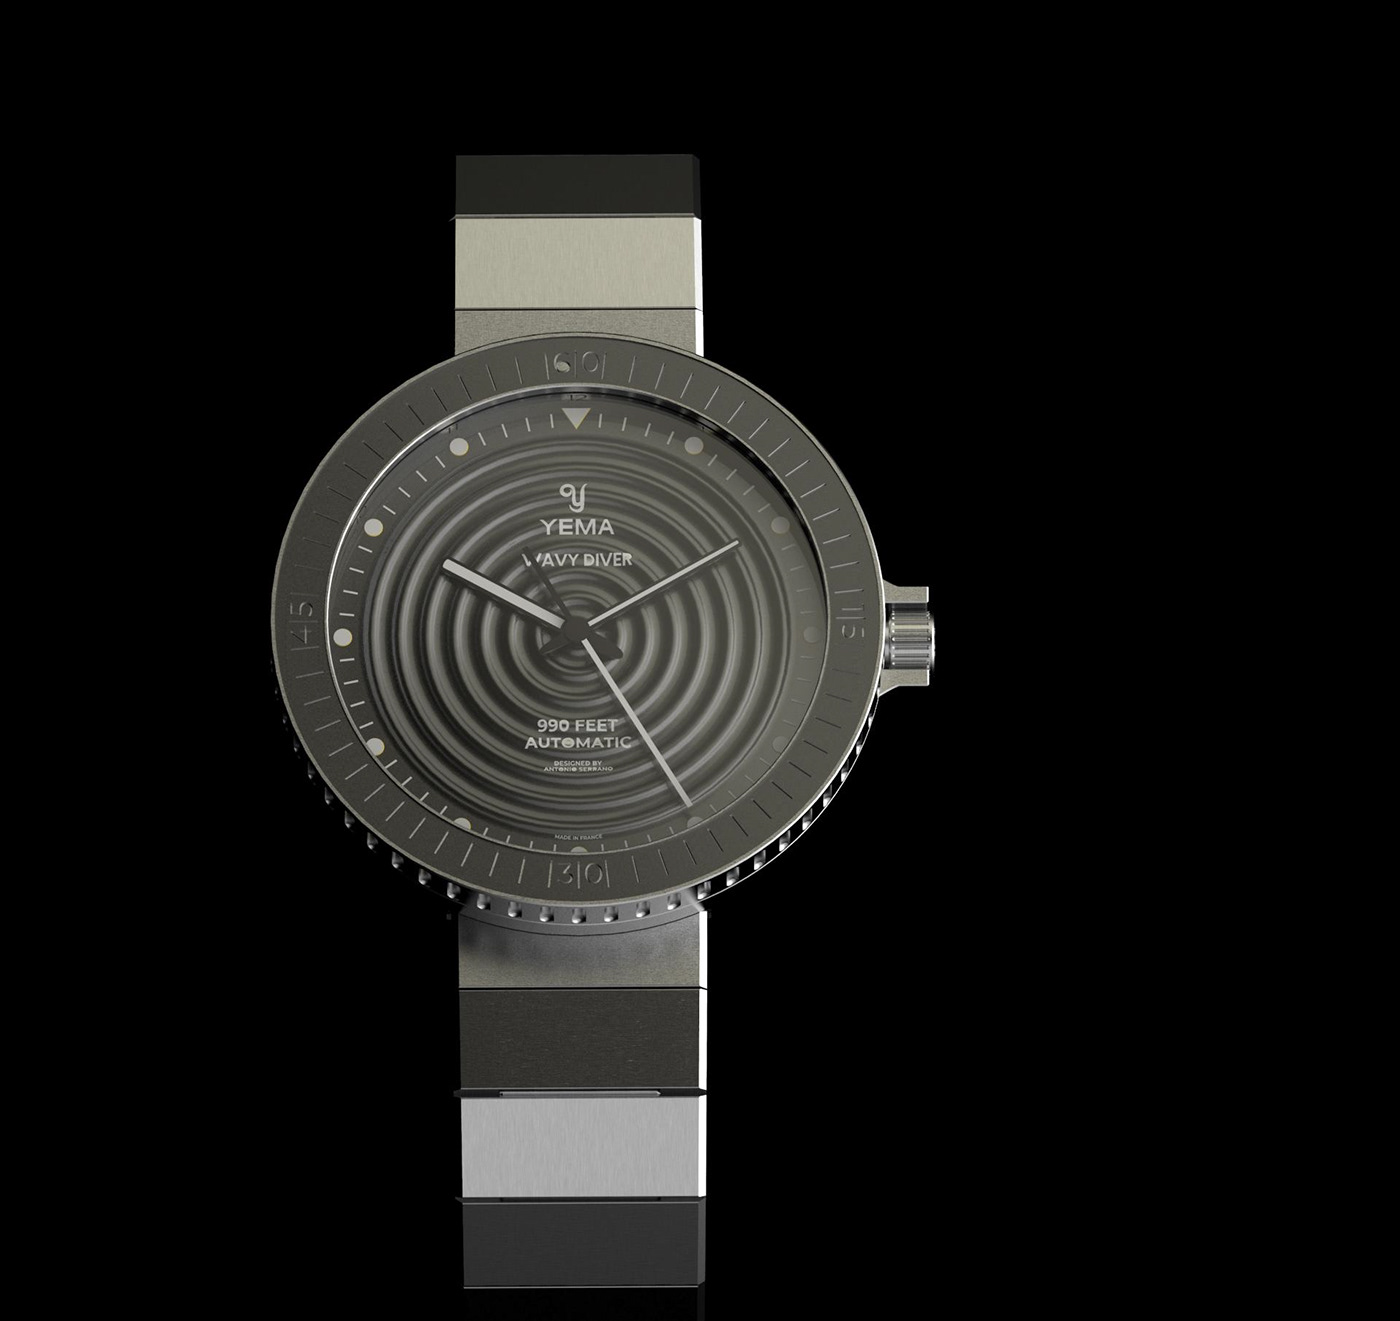 design industrialdesign Mockup productdesign watch yema